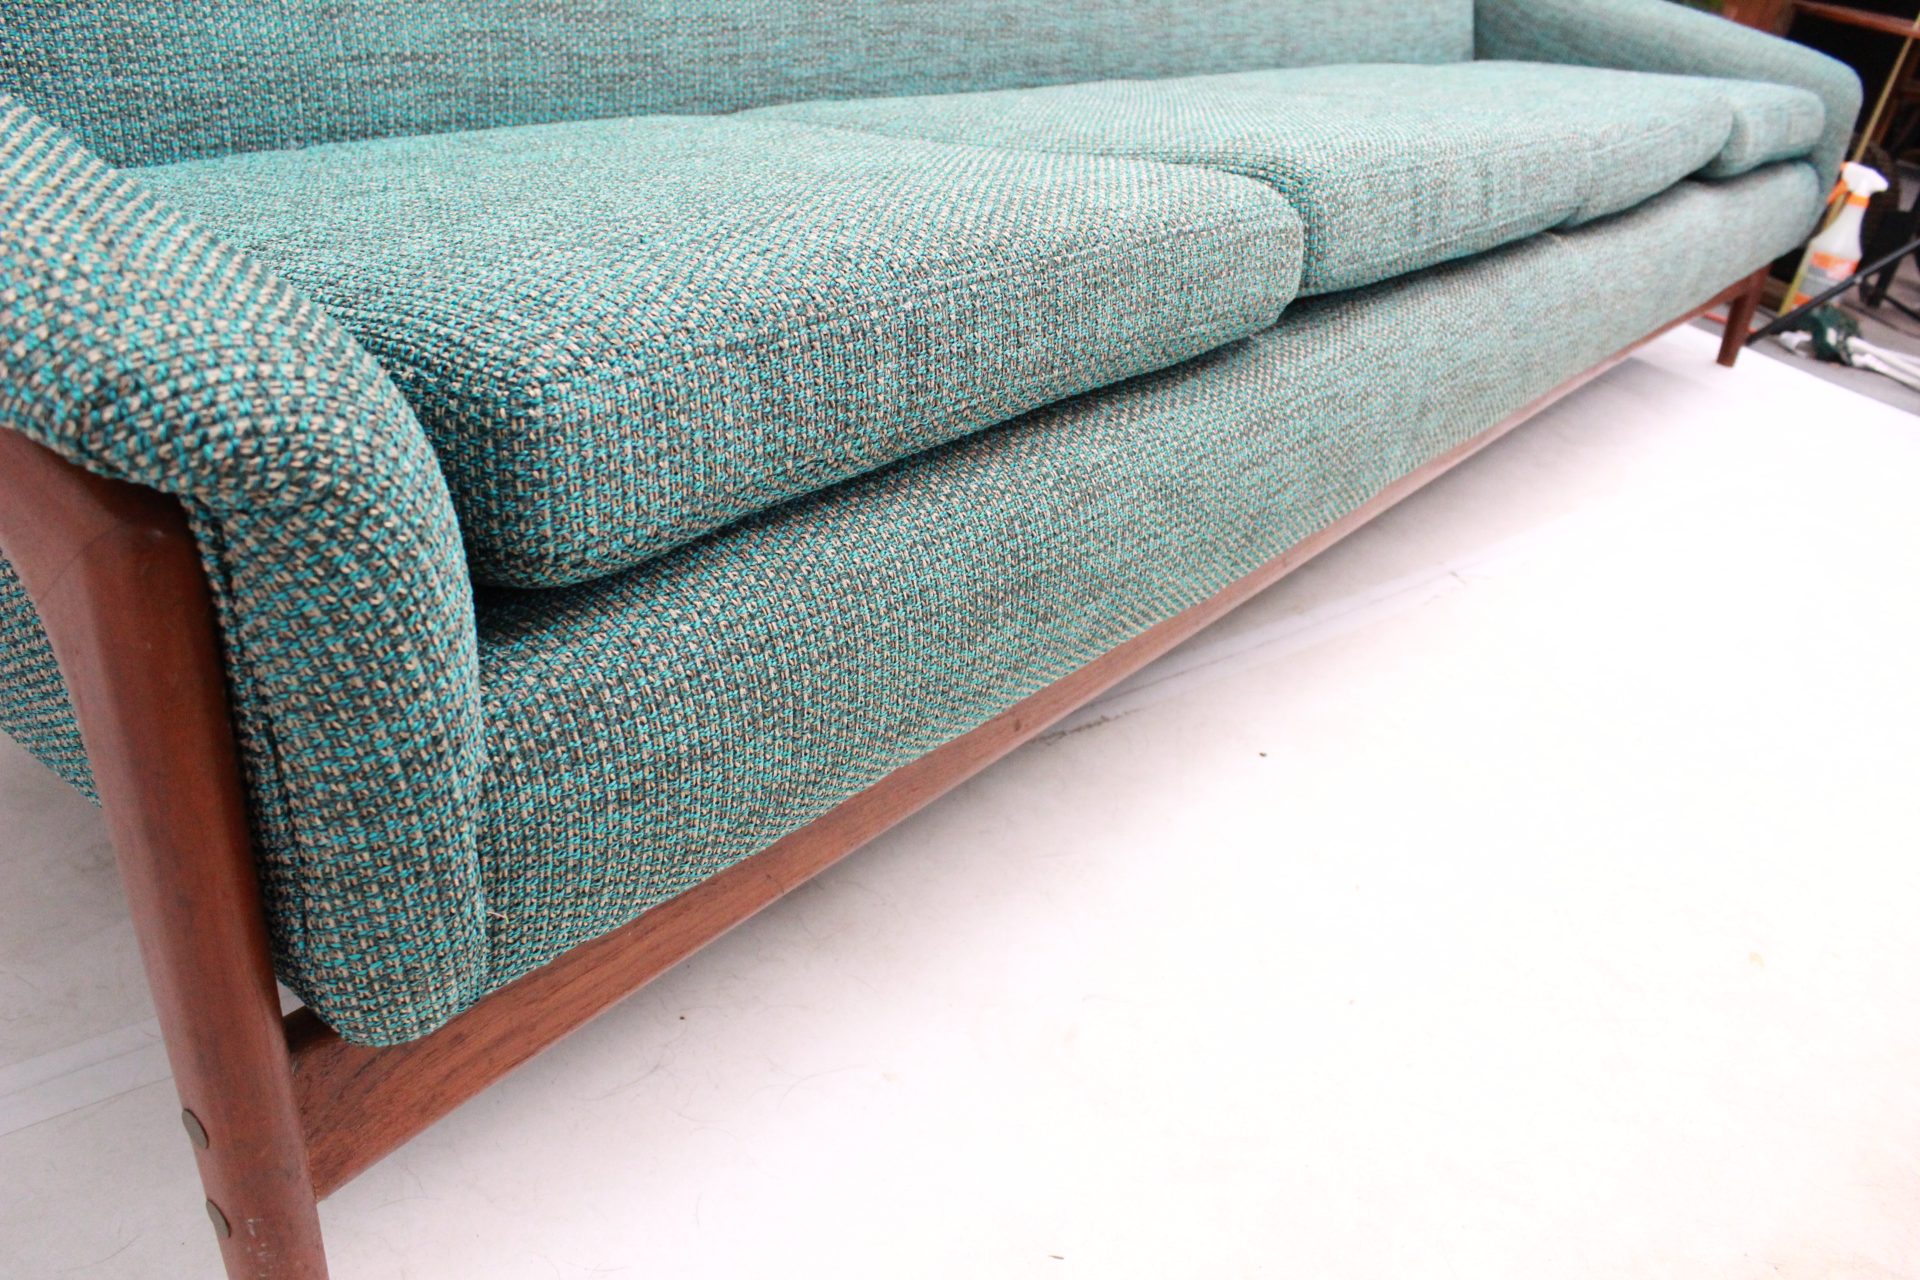 mid century danish modern couch